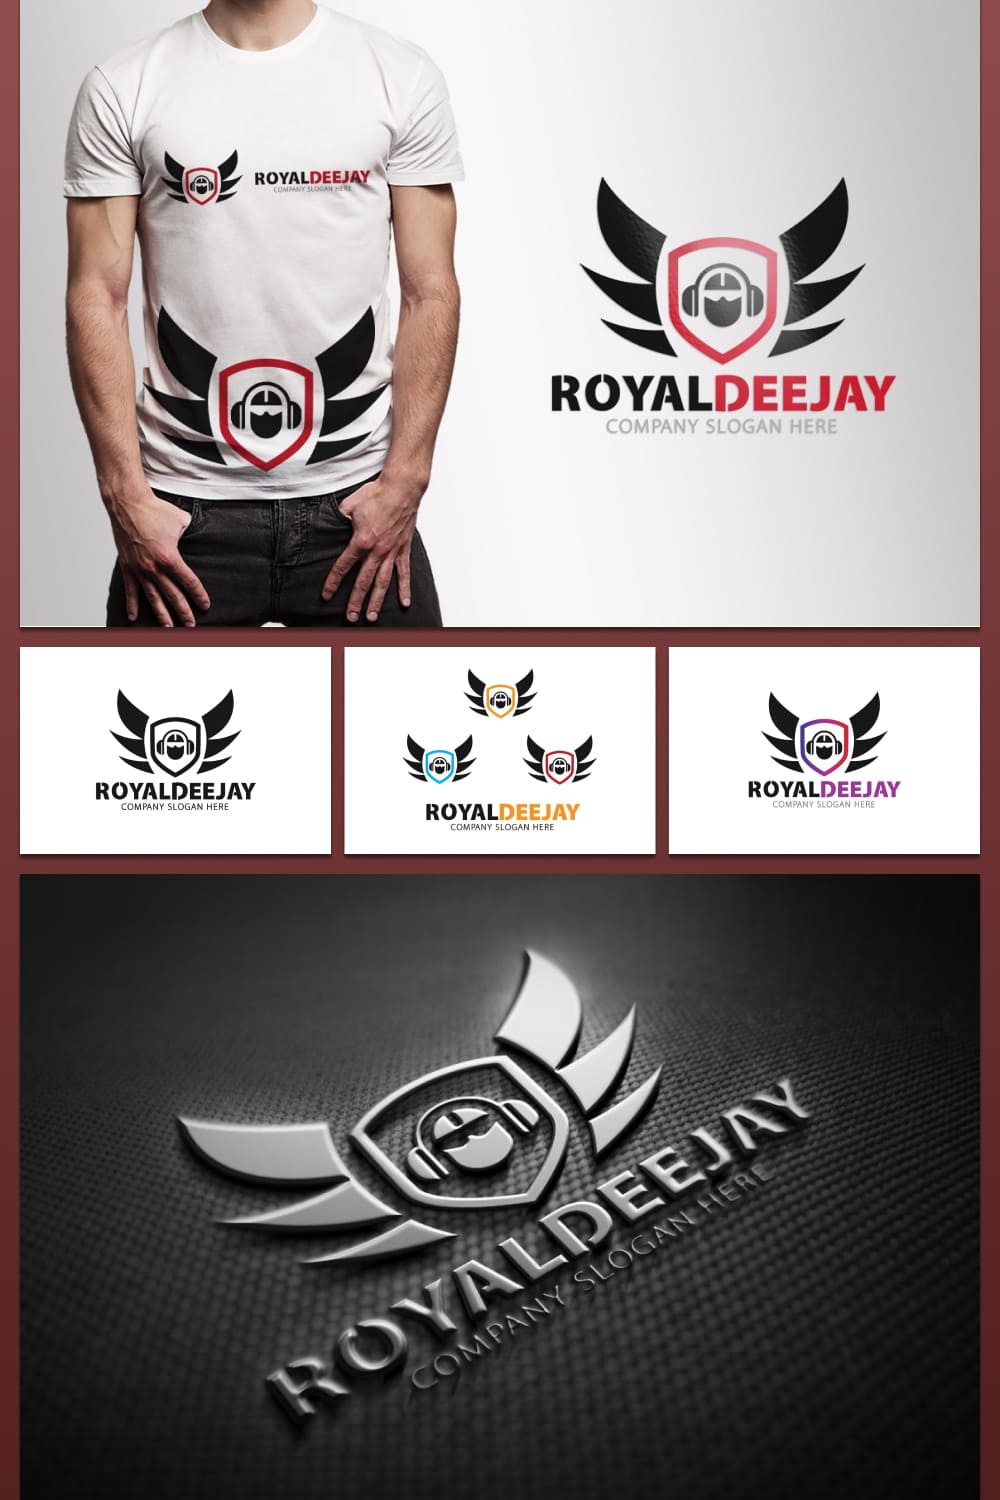 royal dj logo stylish collection.